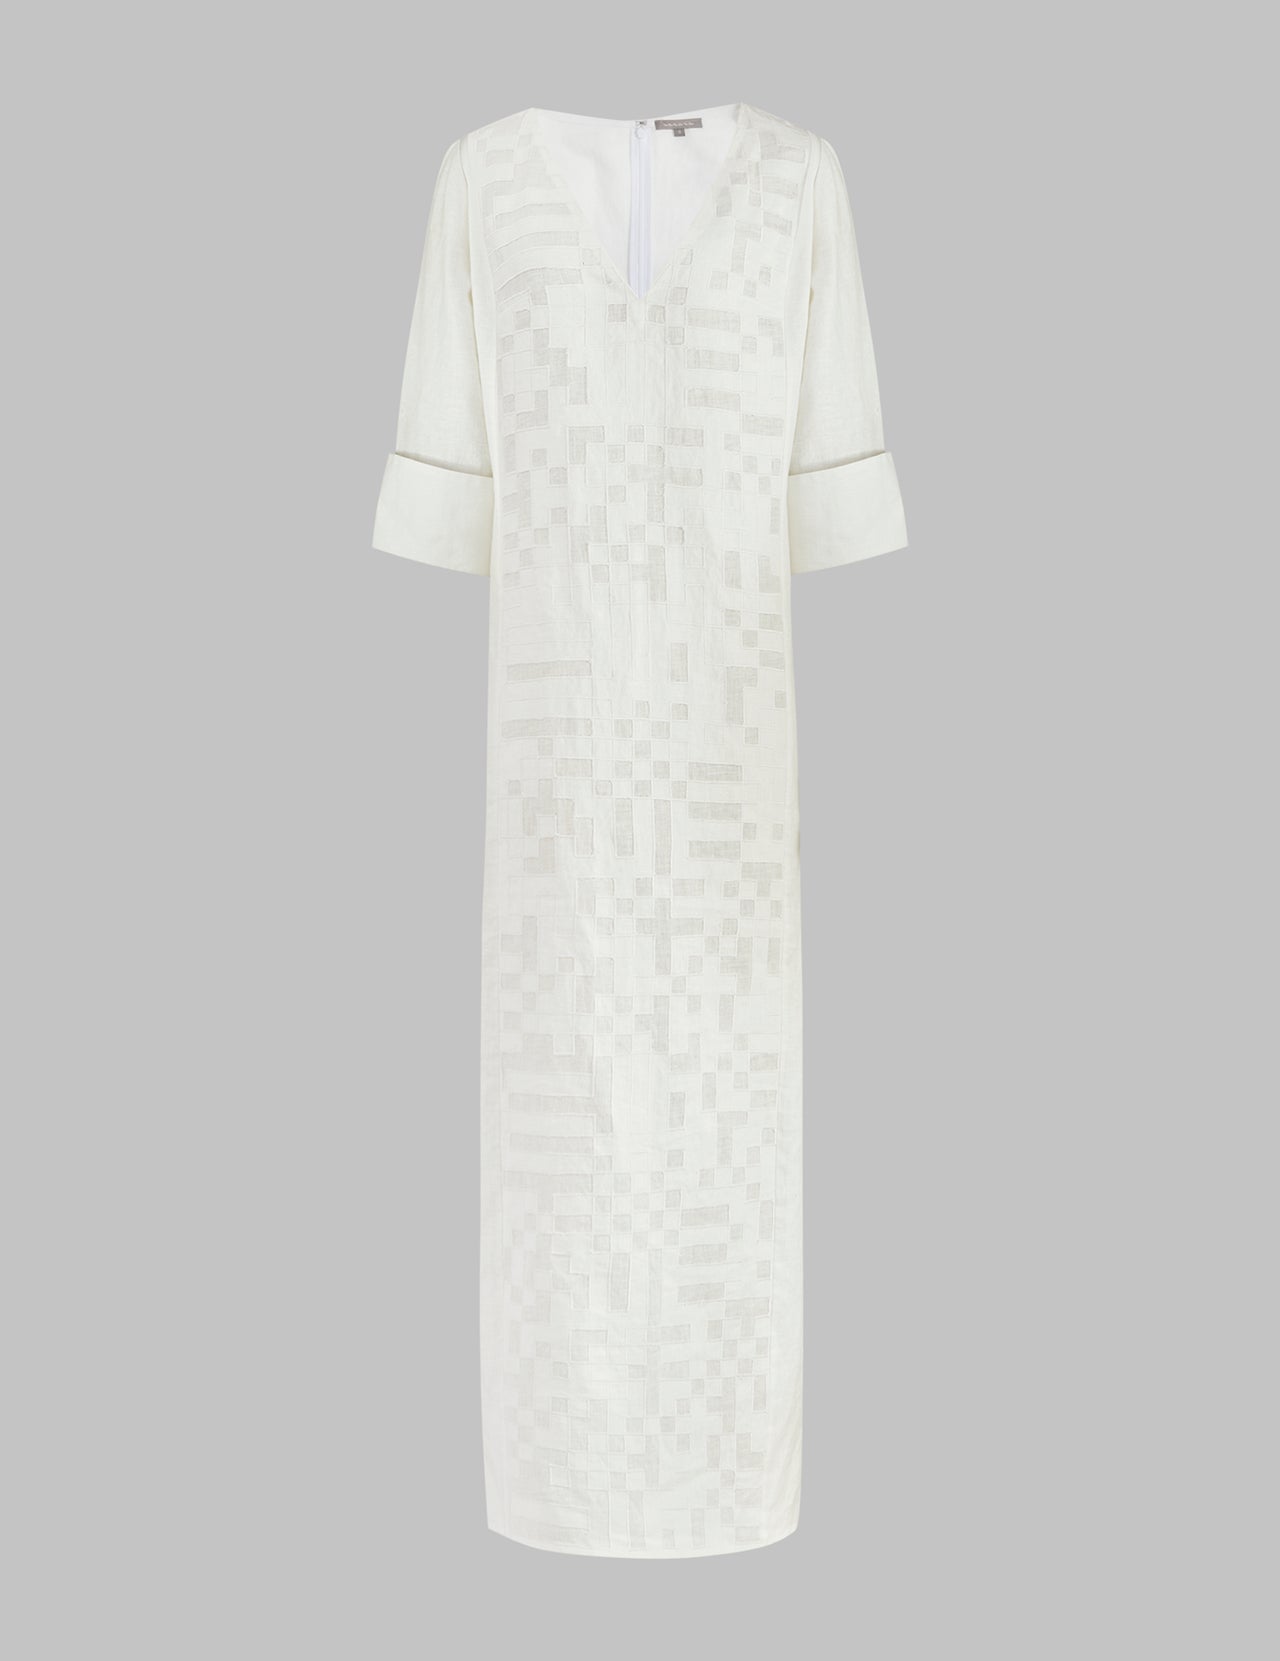  Off White Linen Maxi Dress with Jami Hand Cut Appliqué  